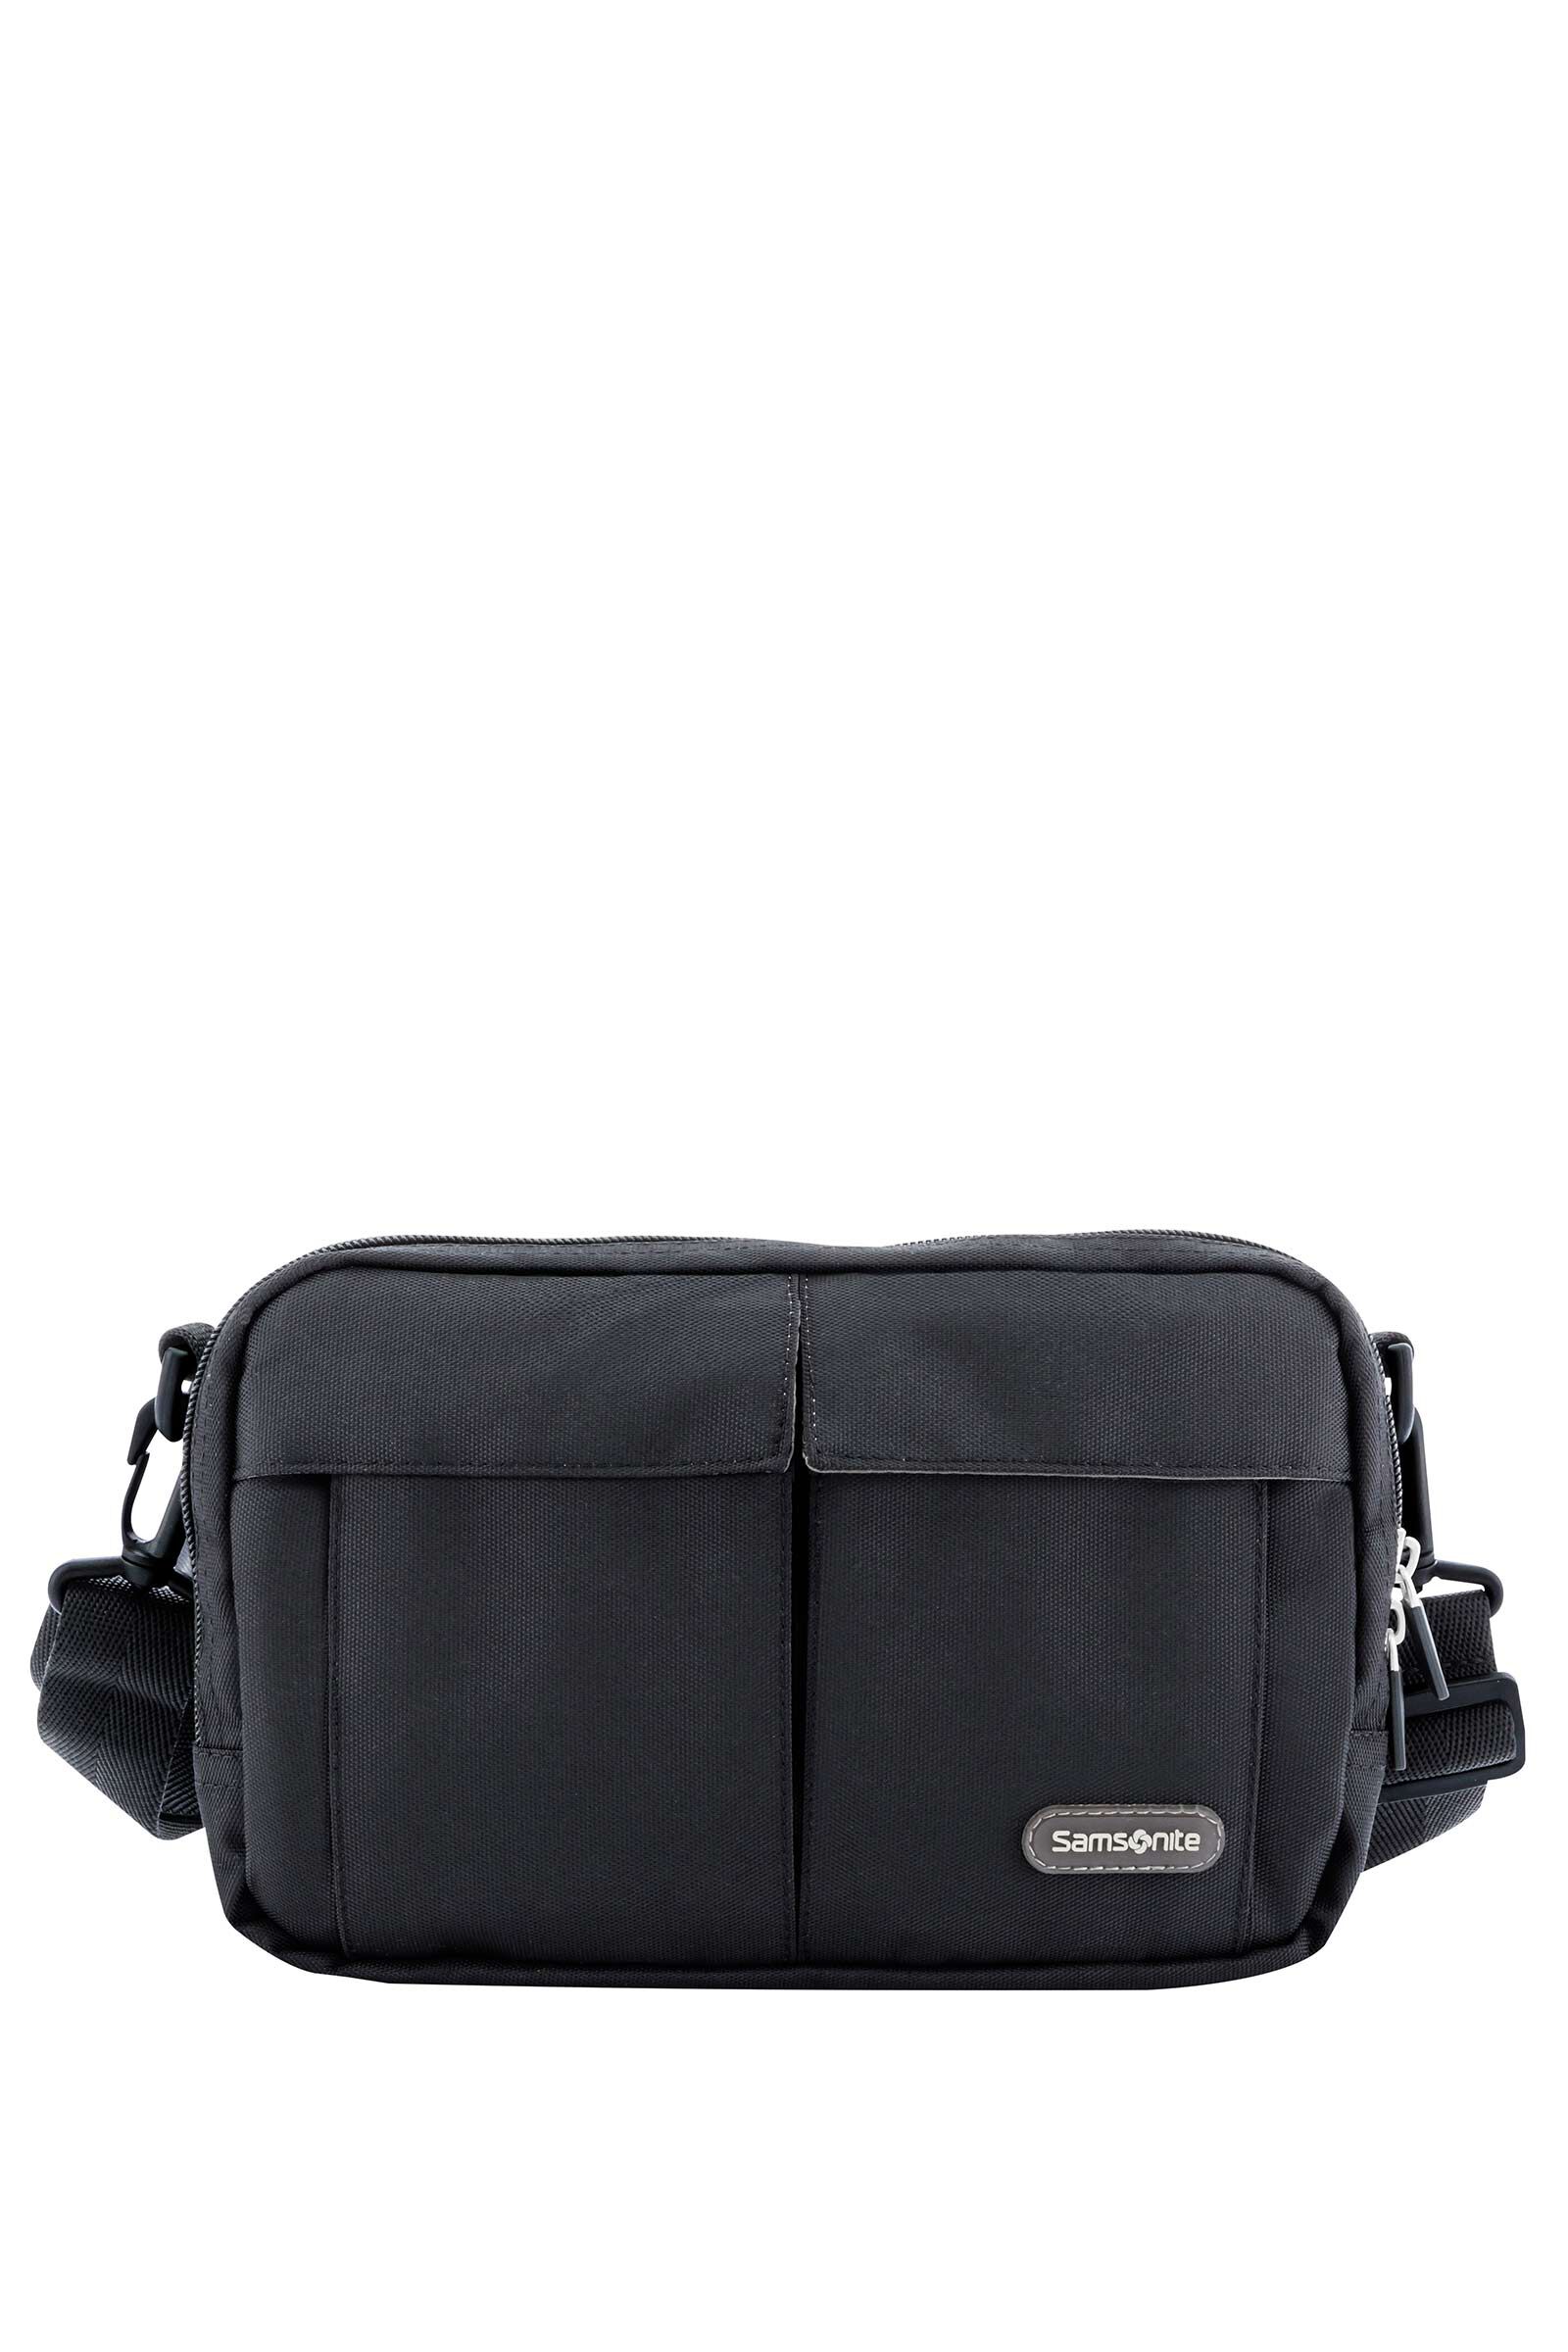 SAMSONITE LITEPOINT WAIST BAG BLACK – Sydney Luggage